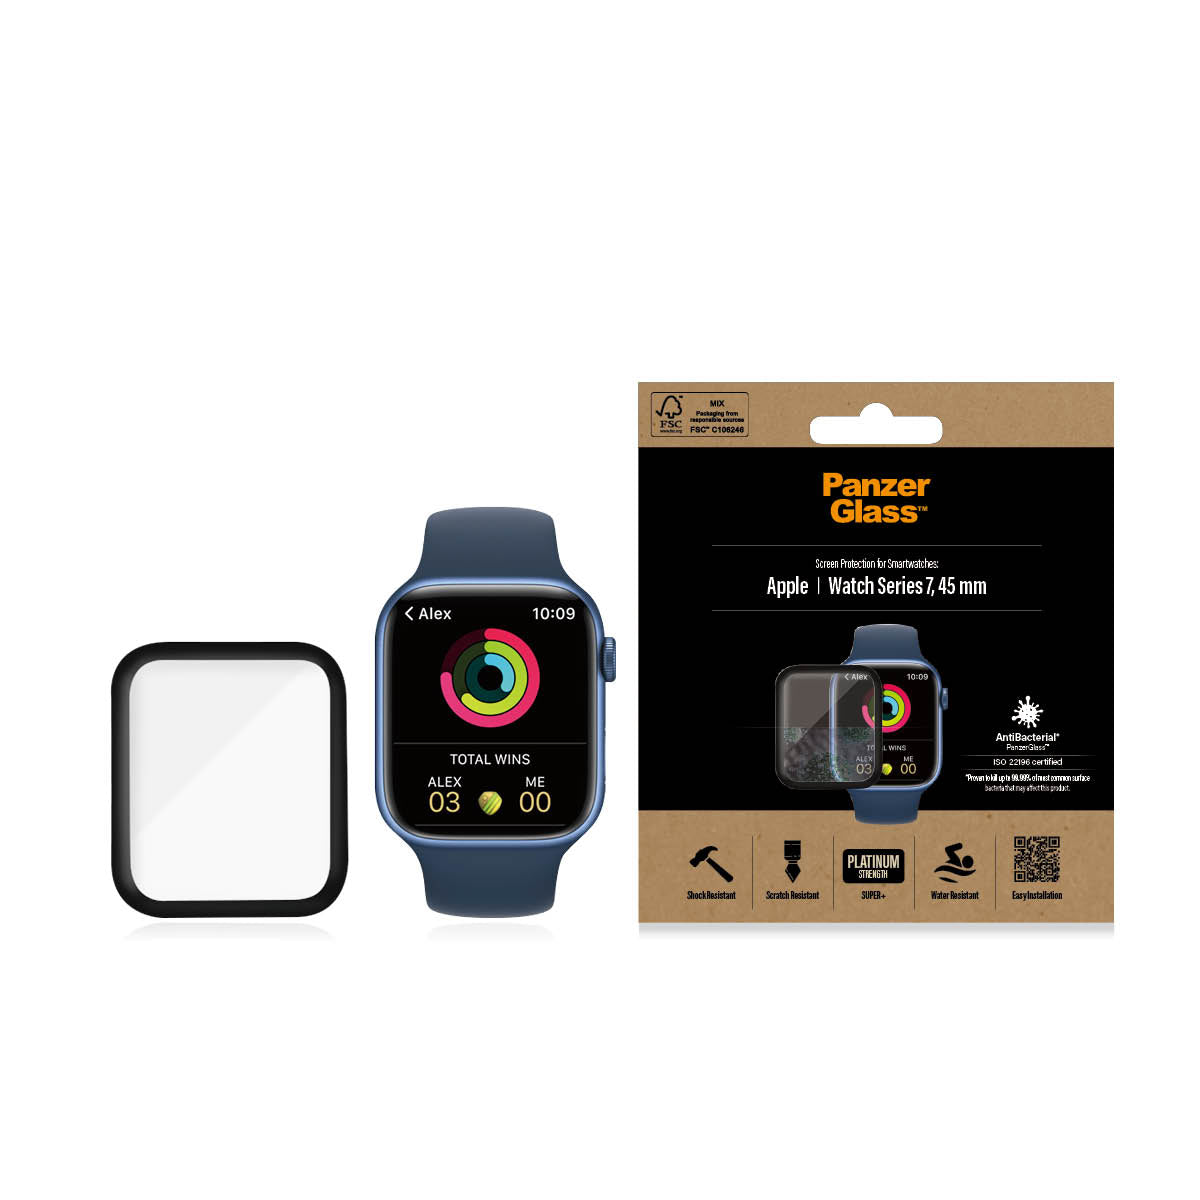 [OPEN BOX] PANZERGLASS Apple Watch Series 7/8 45mm Screen Protector Glass Super Plus - Black Frame - Clear